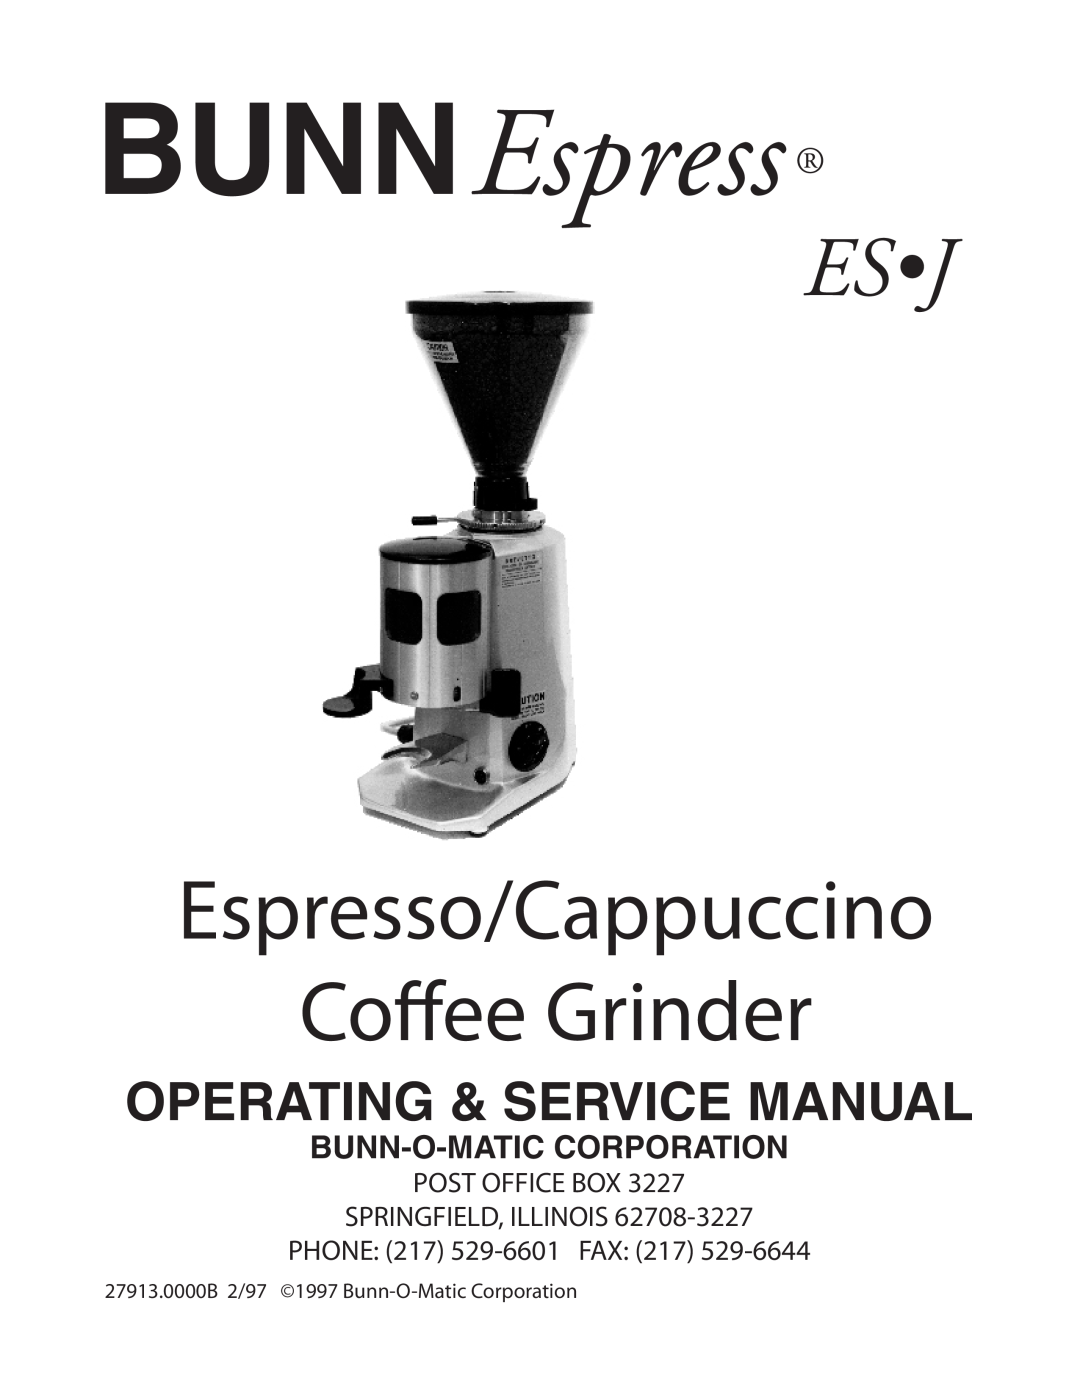 Bunn service manual BUNNEspress Espress ESJ, Esj, Espresso/Cappuccino Coffee Grinder, Bunn-O-Maticcorporation 